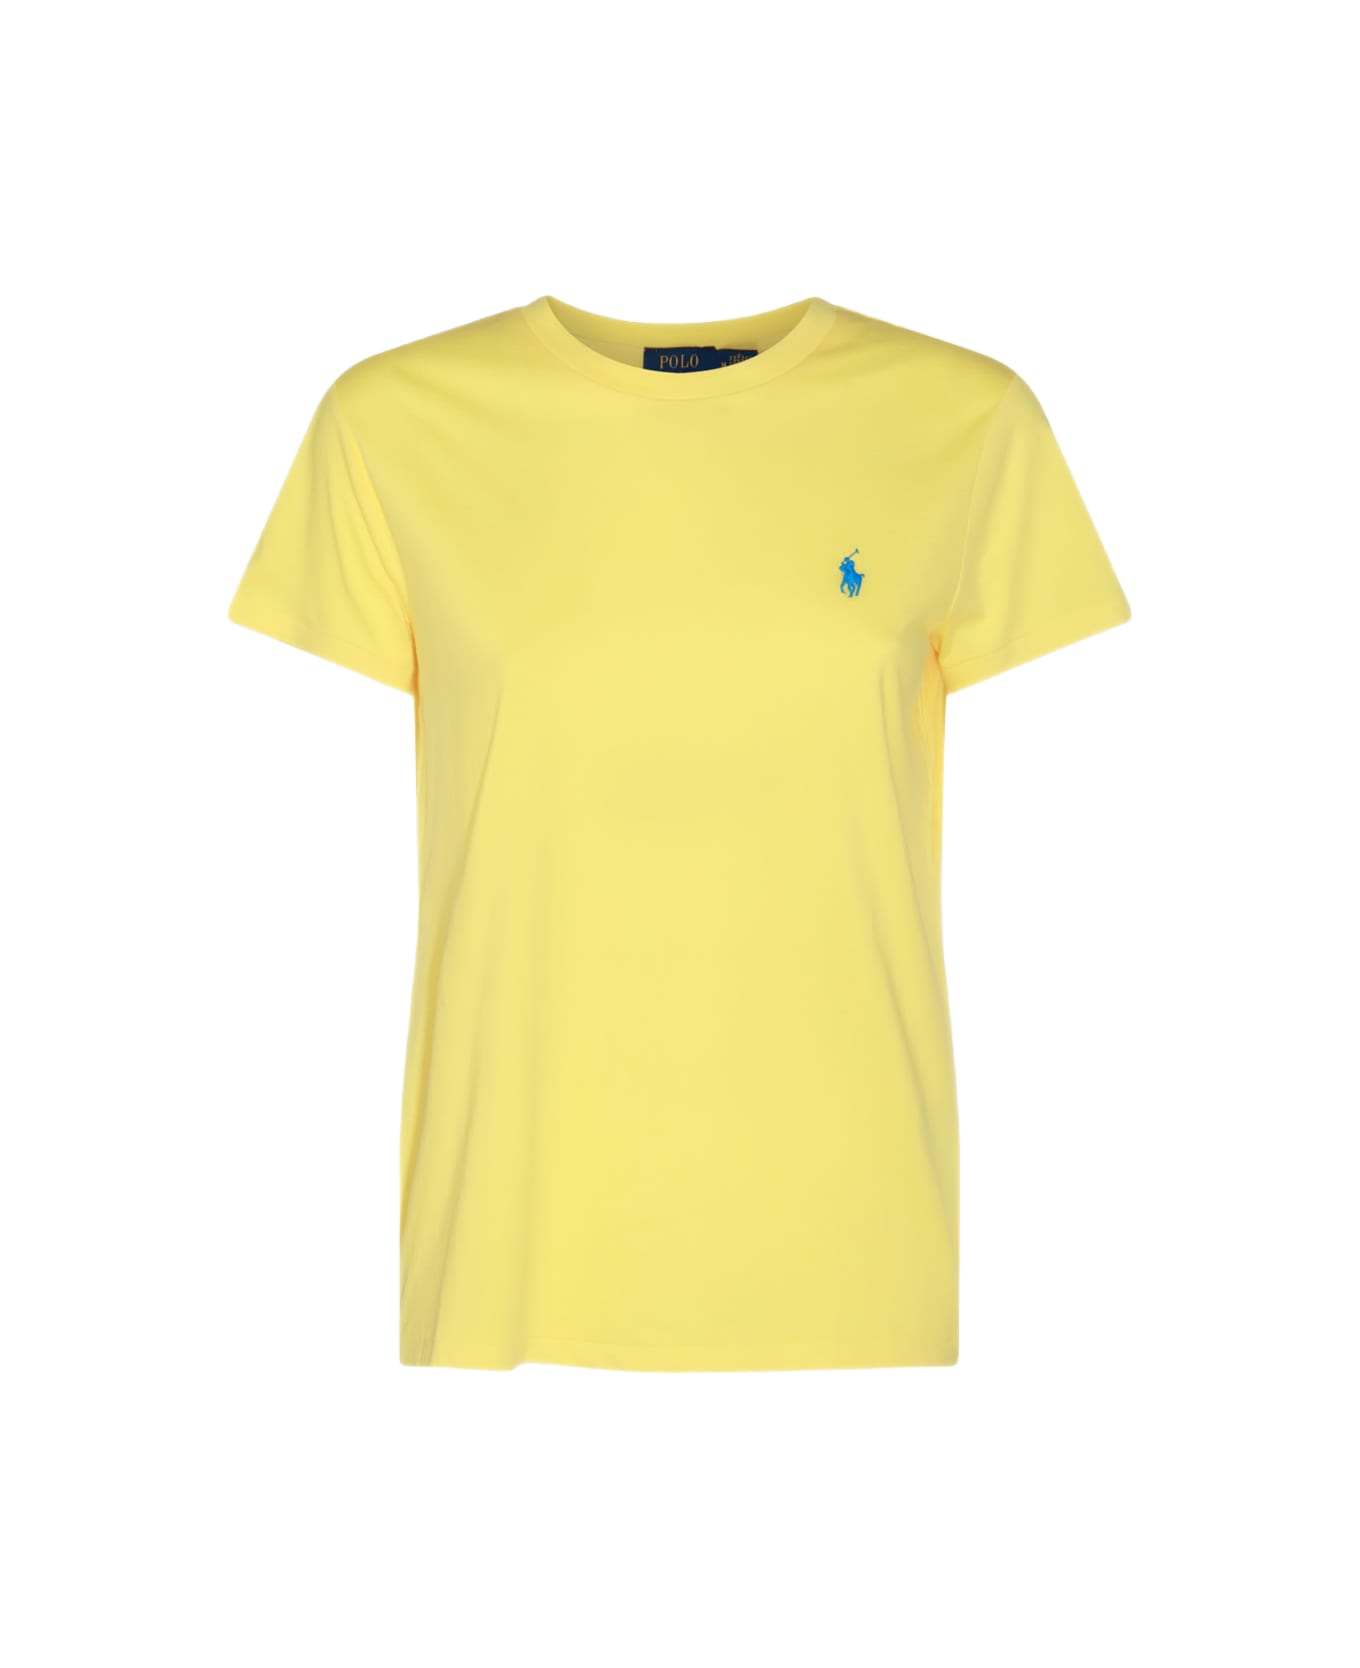 Polo Ralph Lauren Yellow And Blue Cotton T-shirt - COASTAL YELLOW Tシャツ